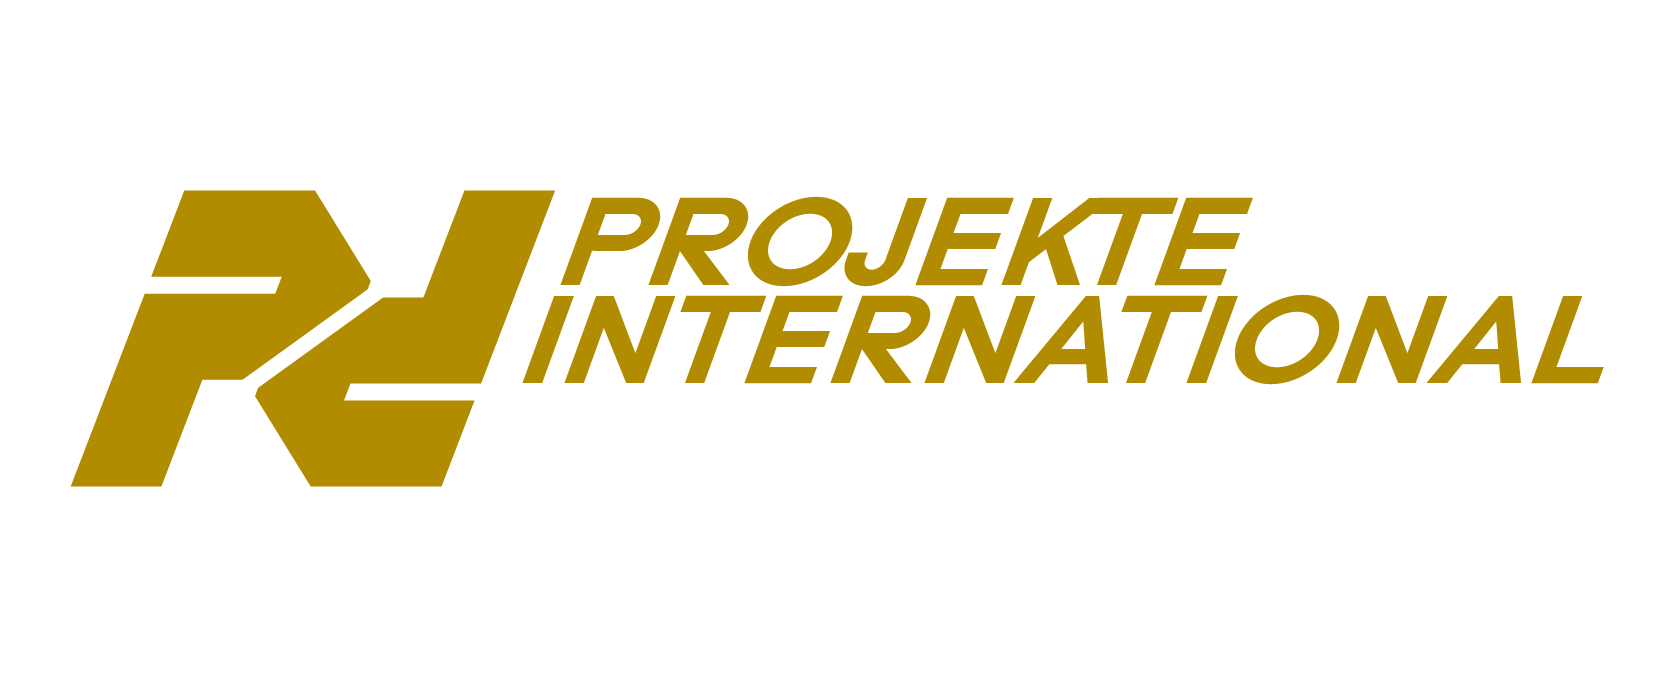 projekte-international3